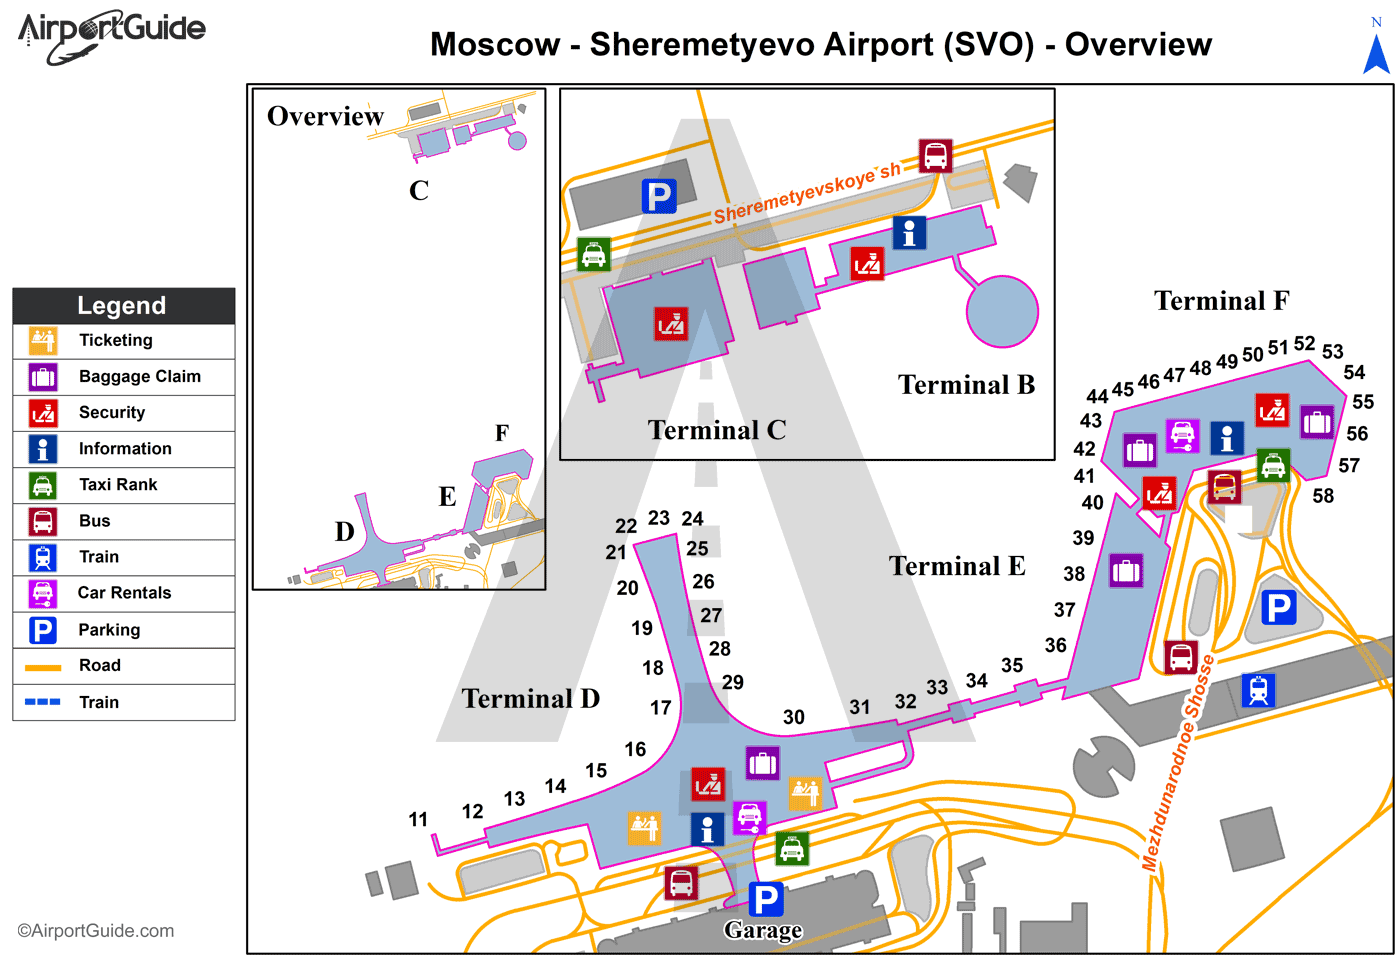 Moscow - Sheremetyevo International (SVO) Airport Terminal Map - Overview